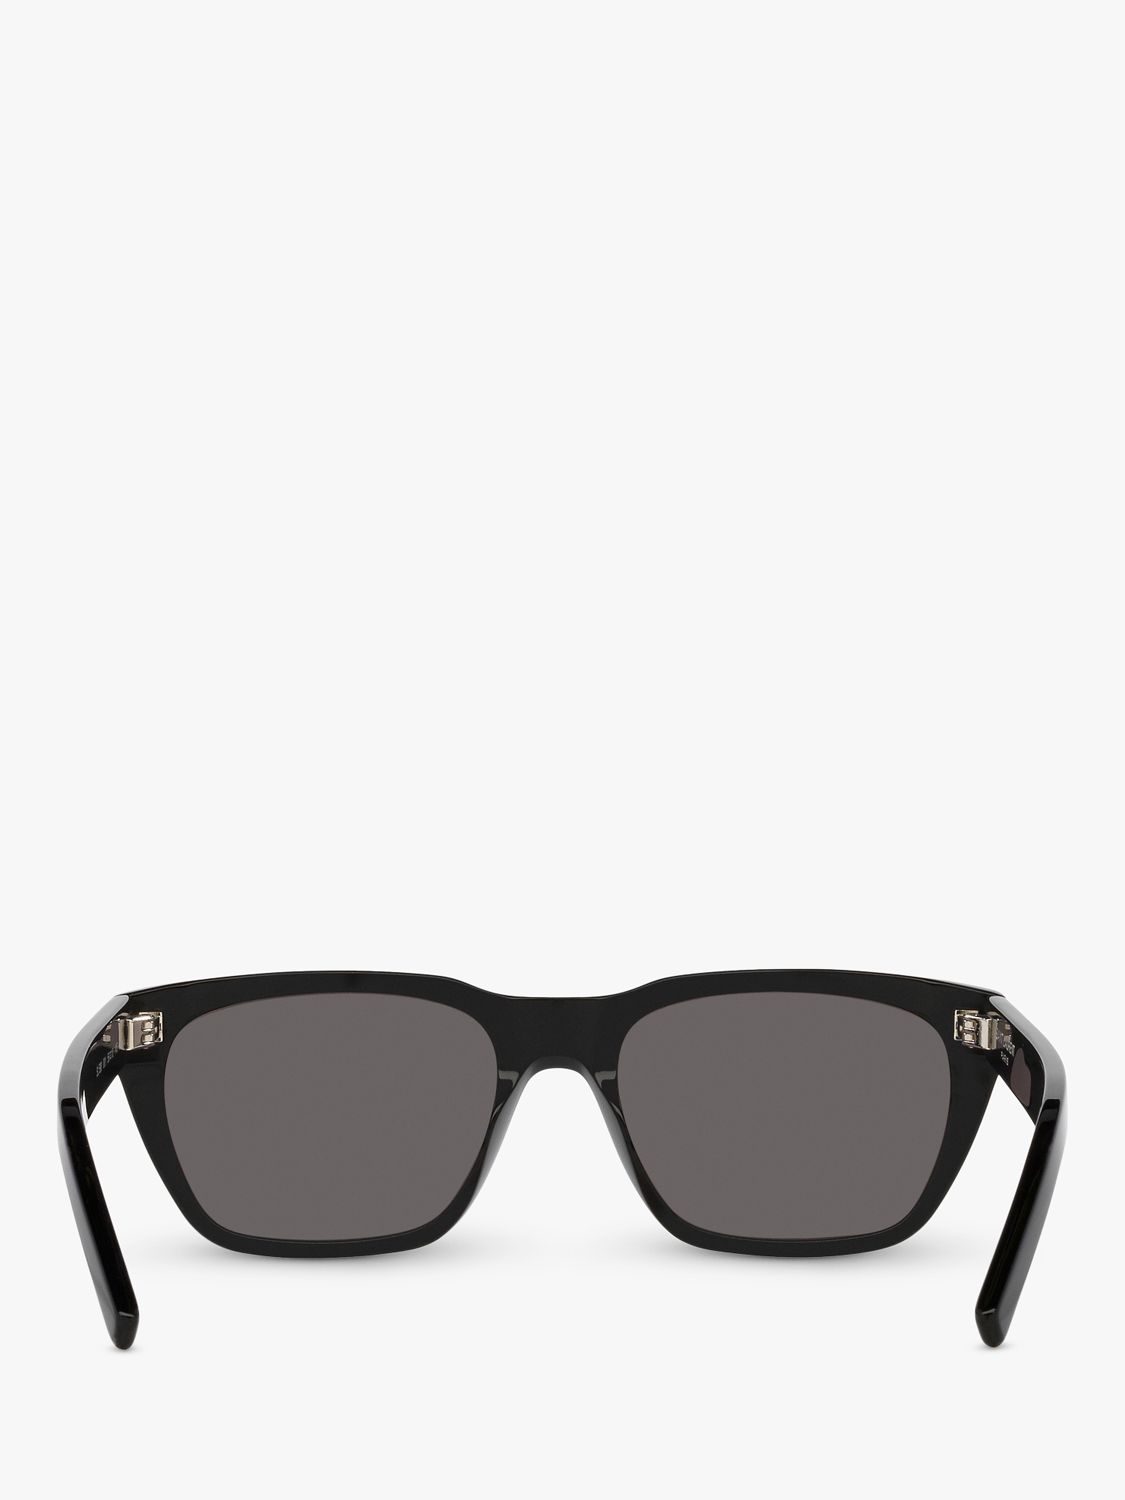 Yves Saint Laurent YS000474 Men's D-Shape Sunglasses, Black/Grey